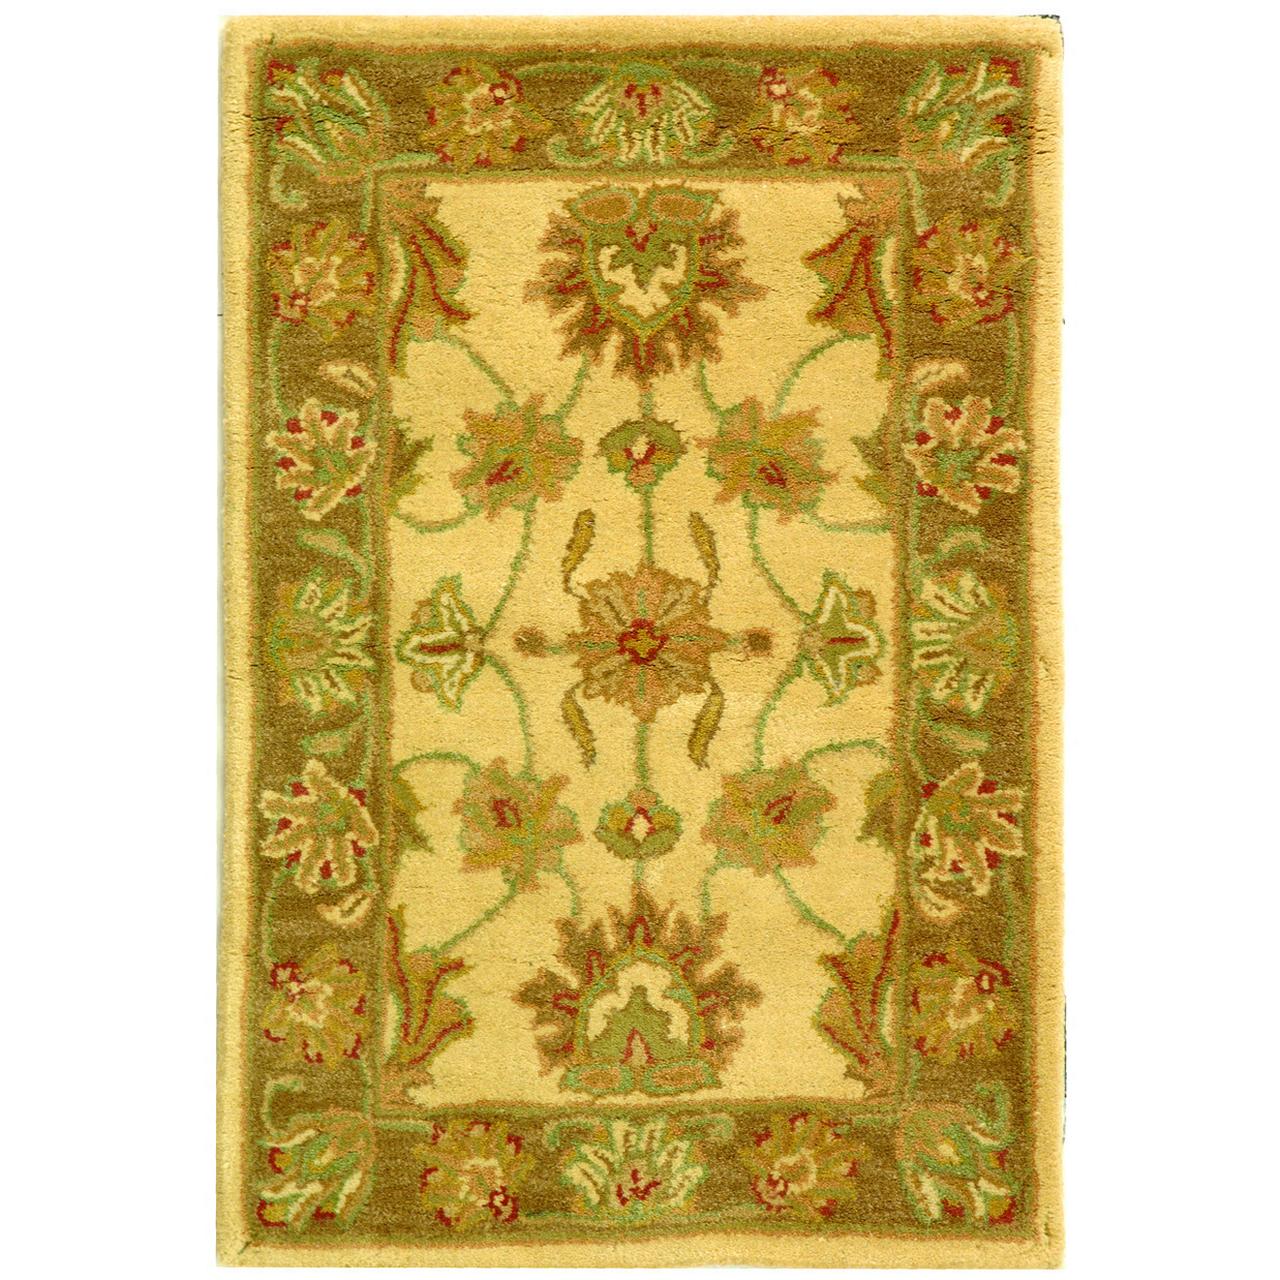 SAFAVIEH Heritage Regis Traditional Wool Area Rug, Ivory/Brown, 4'6" x 6'6" Oval - image 5 of 9